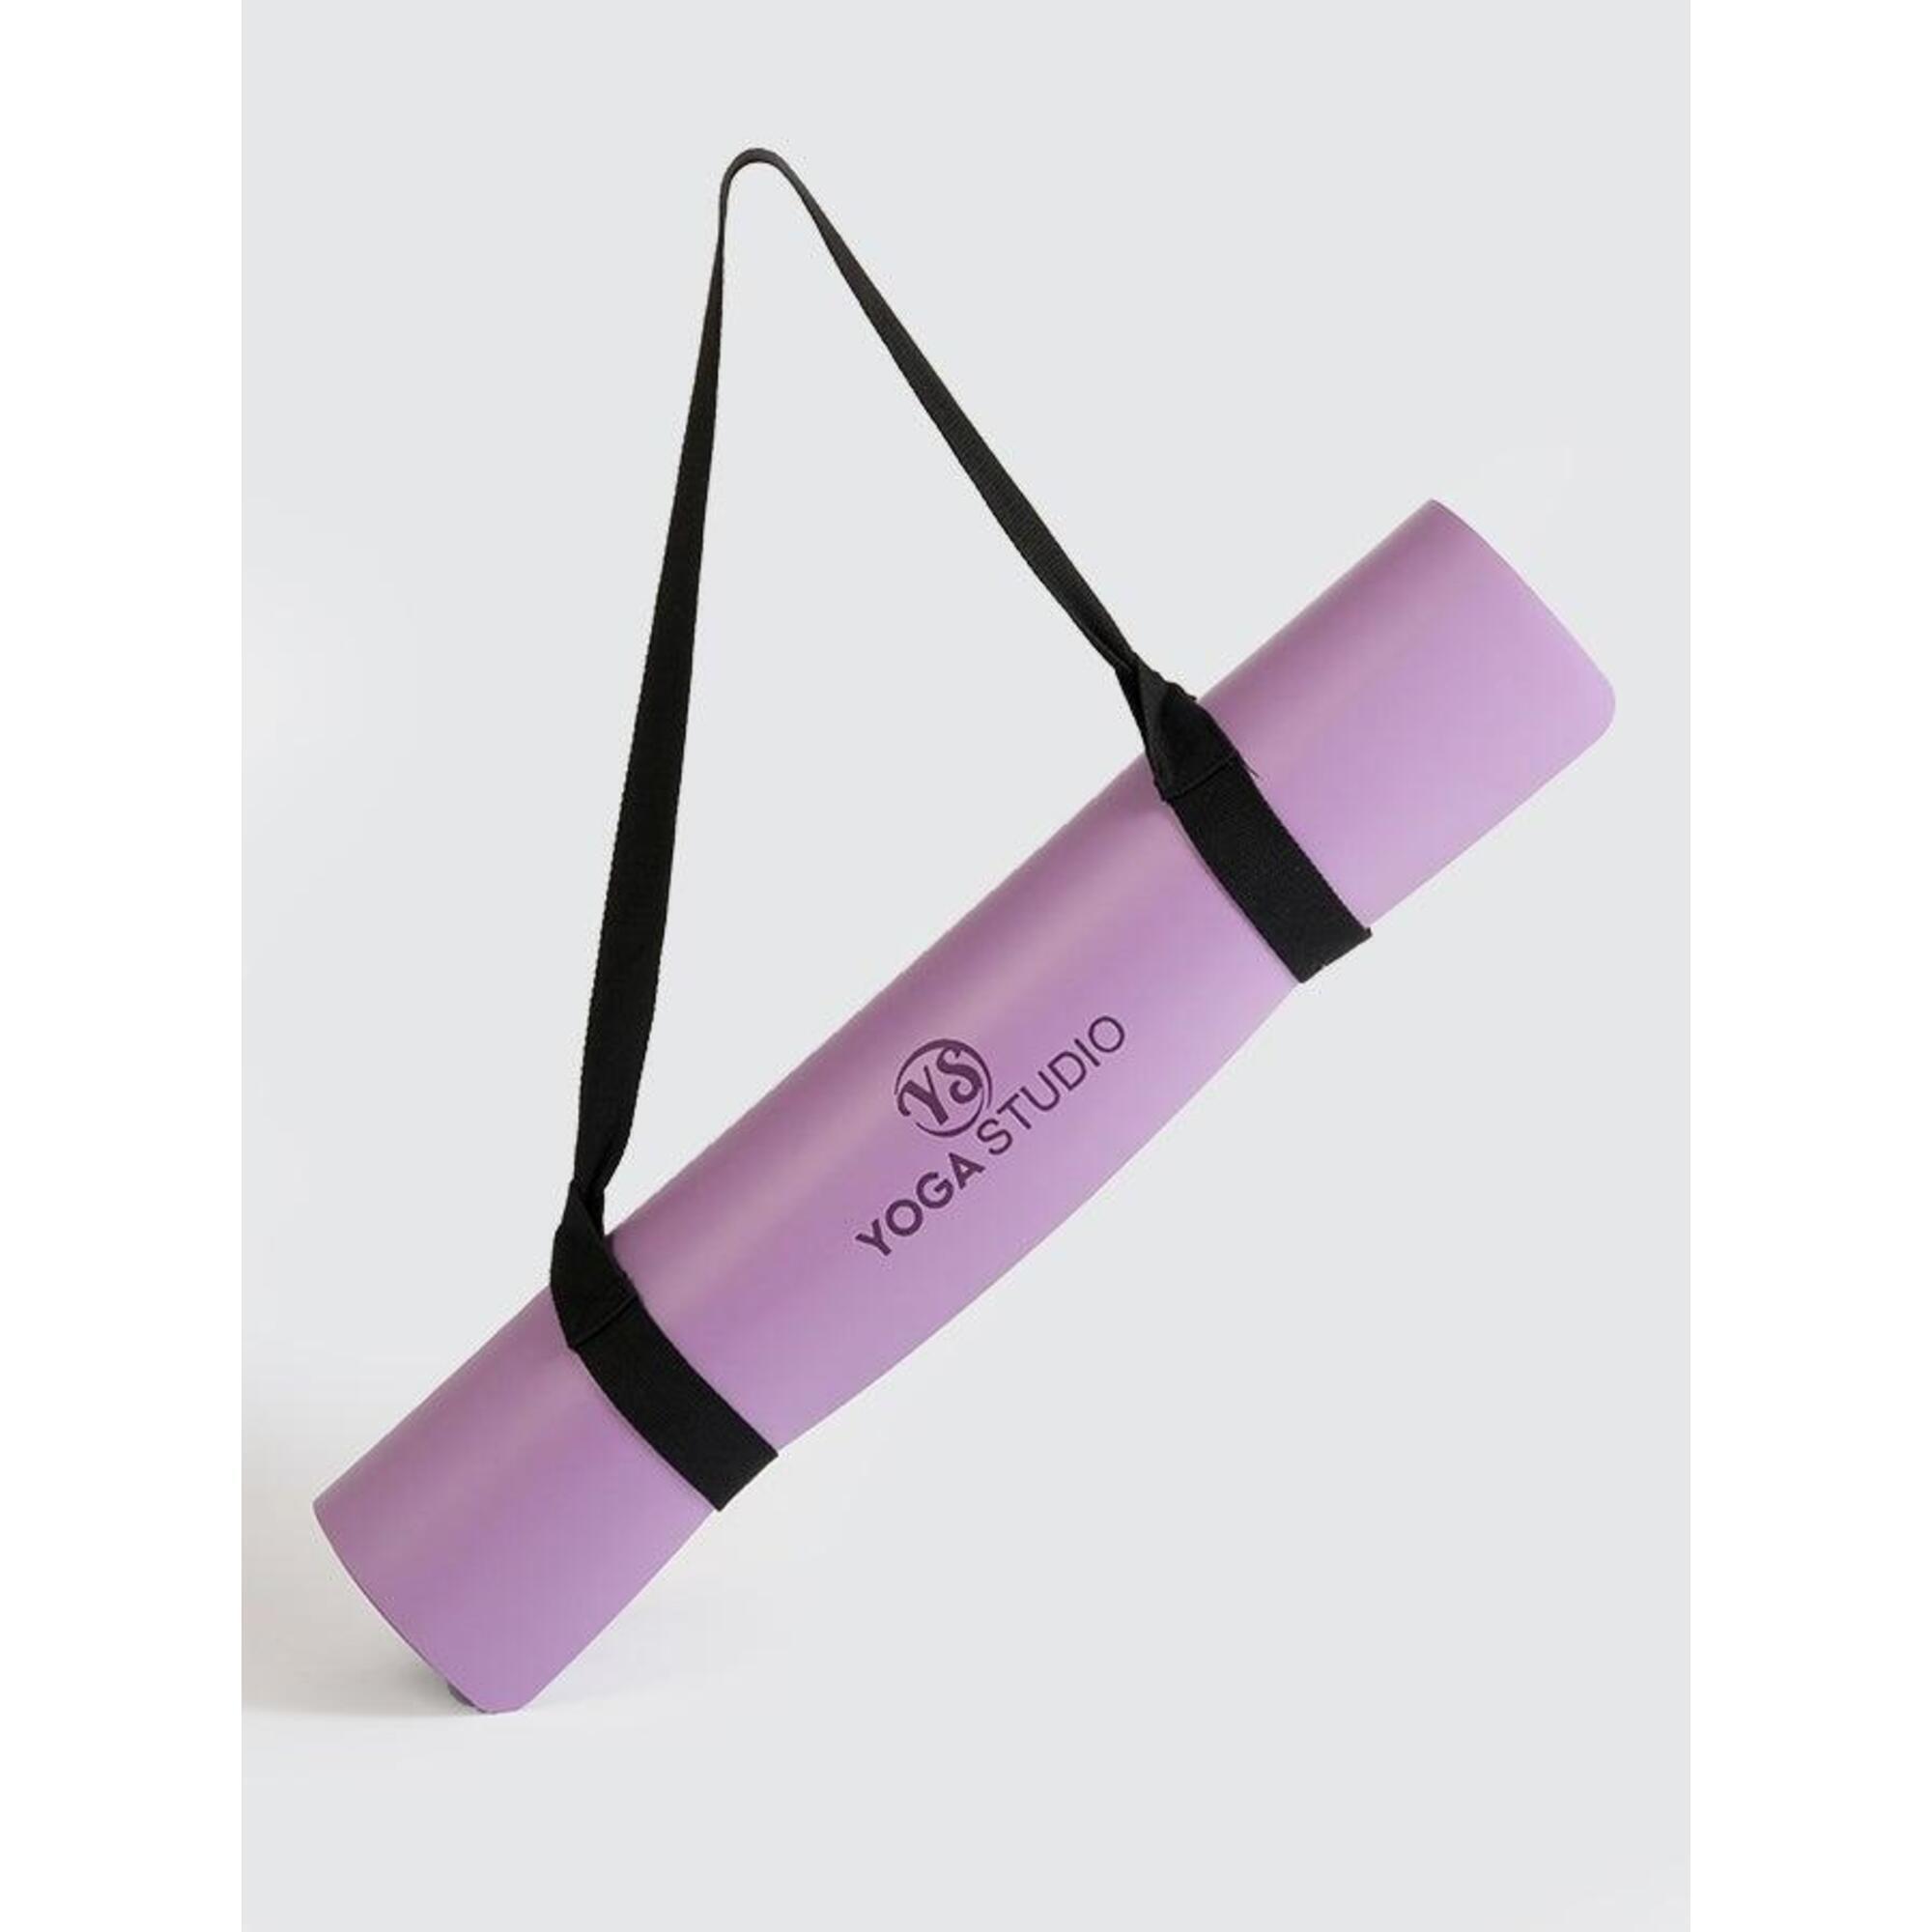 Yoga Studio The Grip Compact Yoga Mat 4mm - Purple 4/4